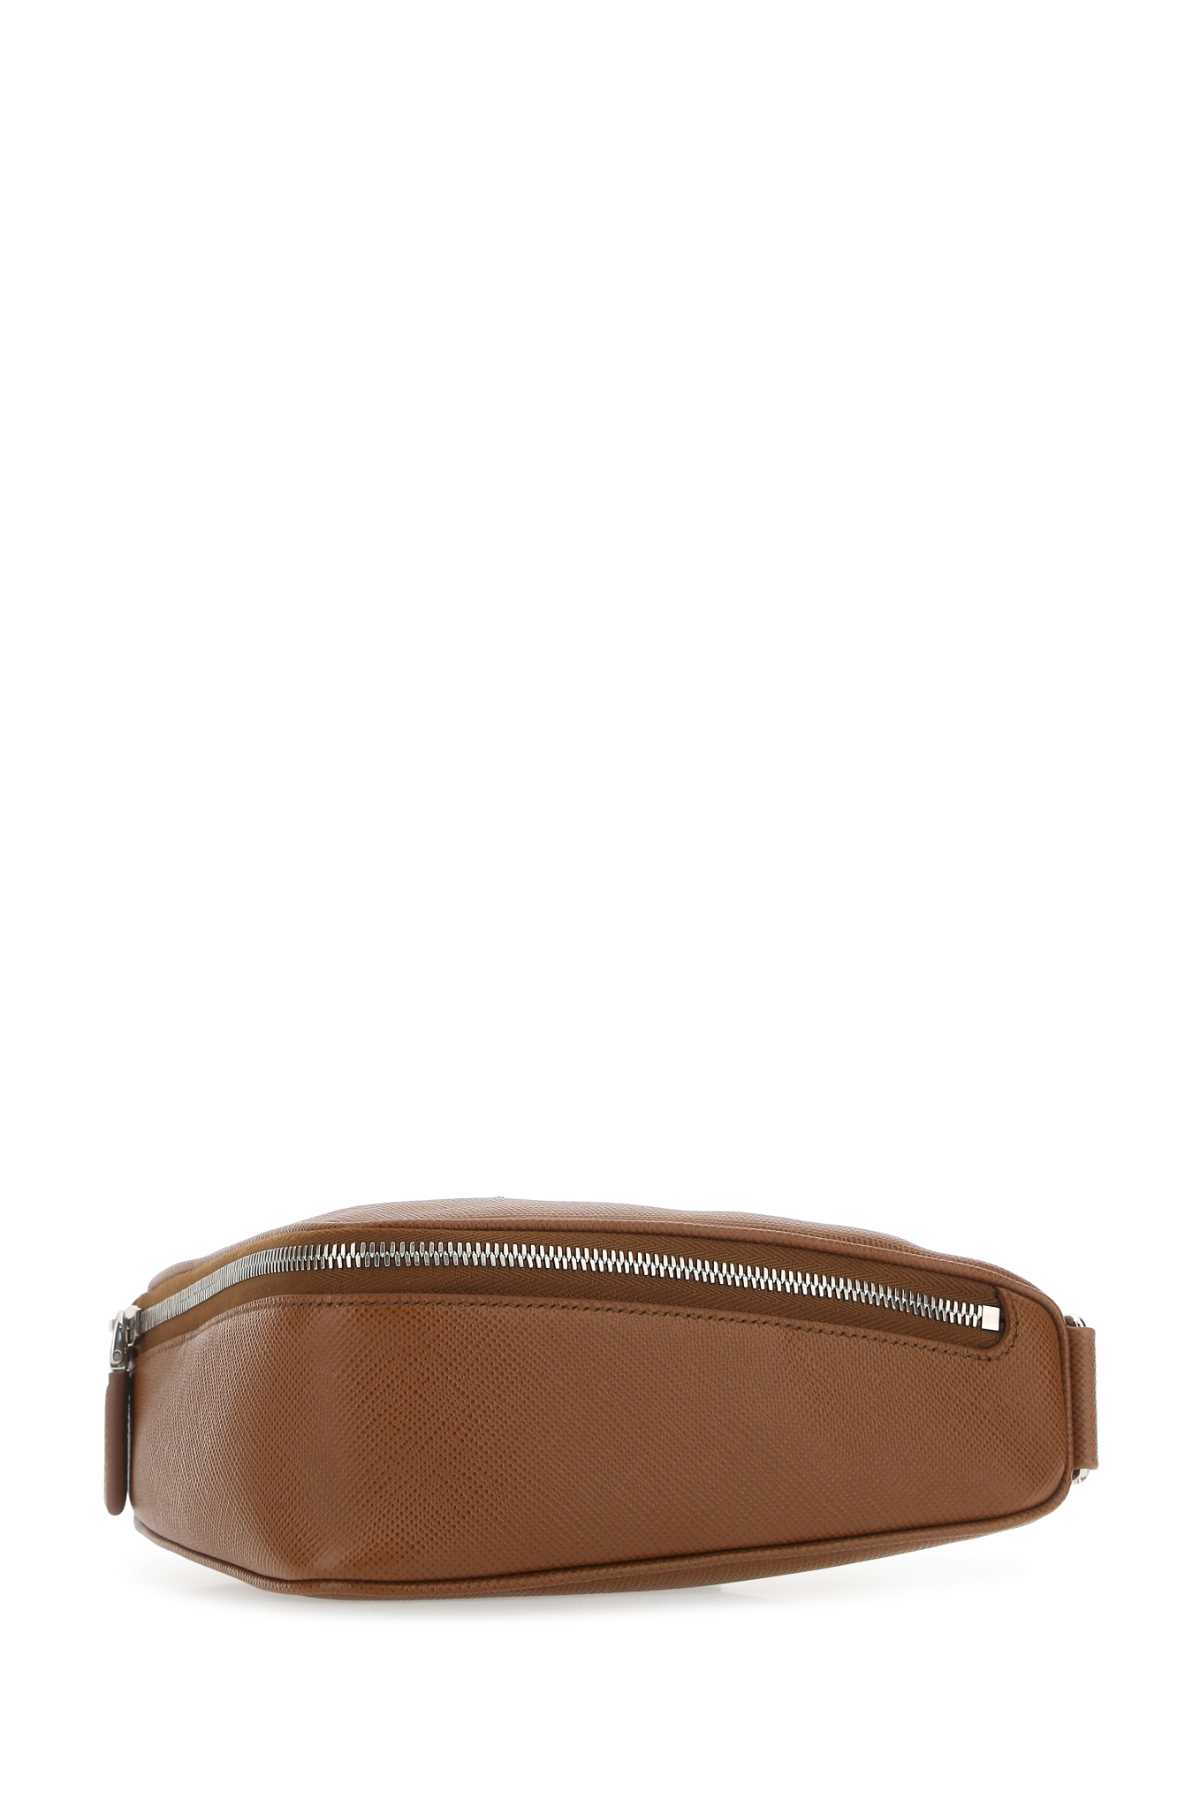 Prada Textured Strap Leather Belt Bag In F0046